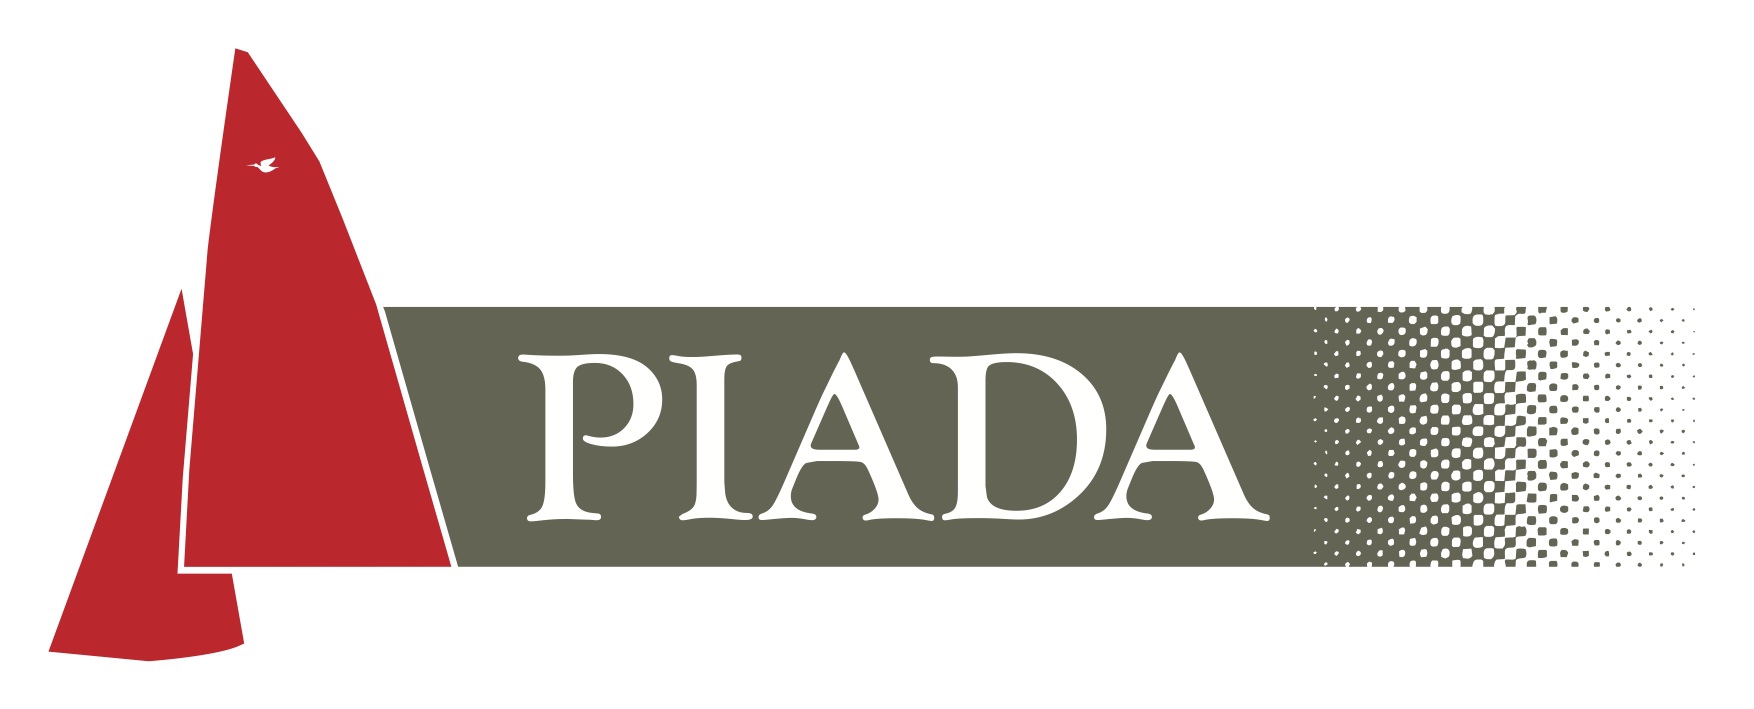 Piada Trophy Image